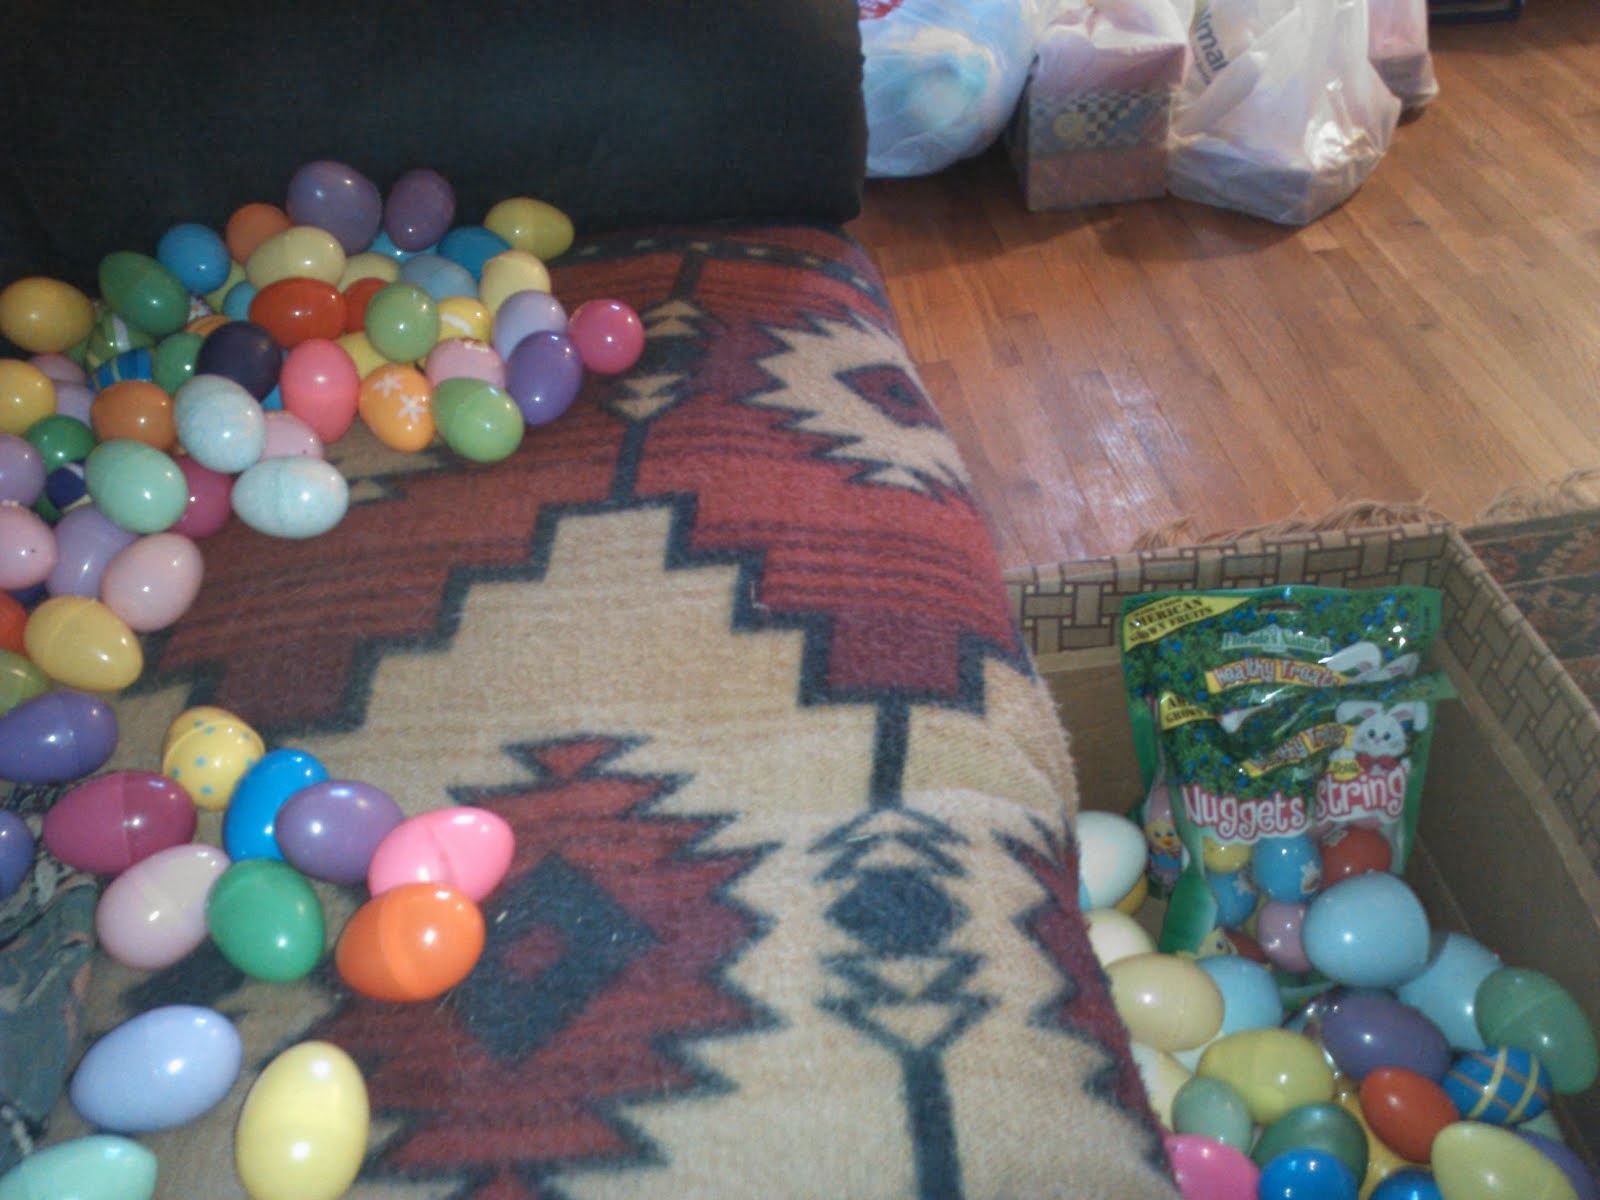 getting ready for massive Easter egg hunt